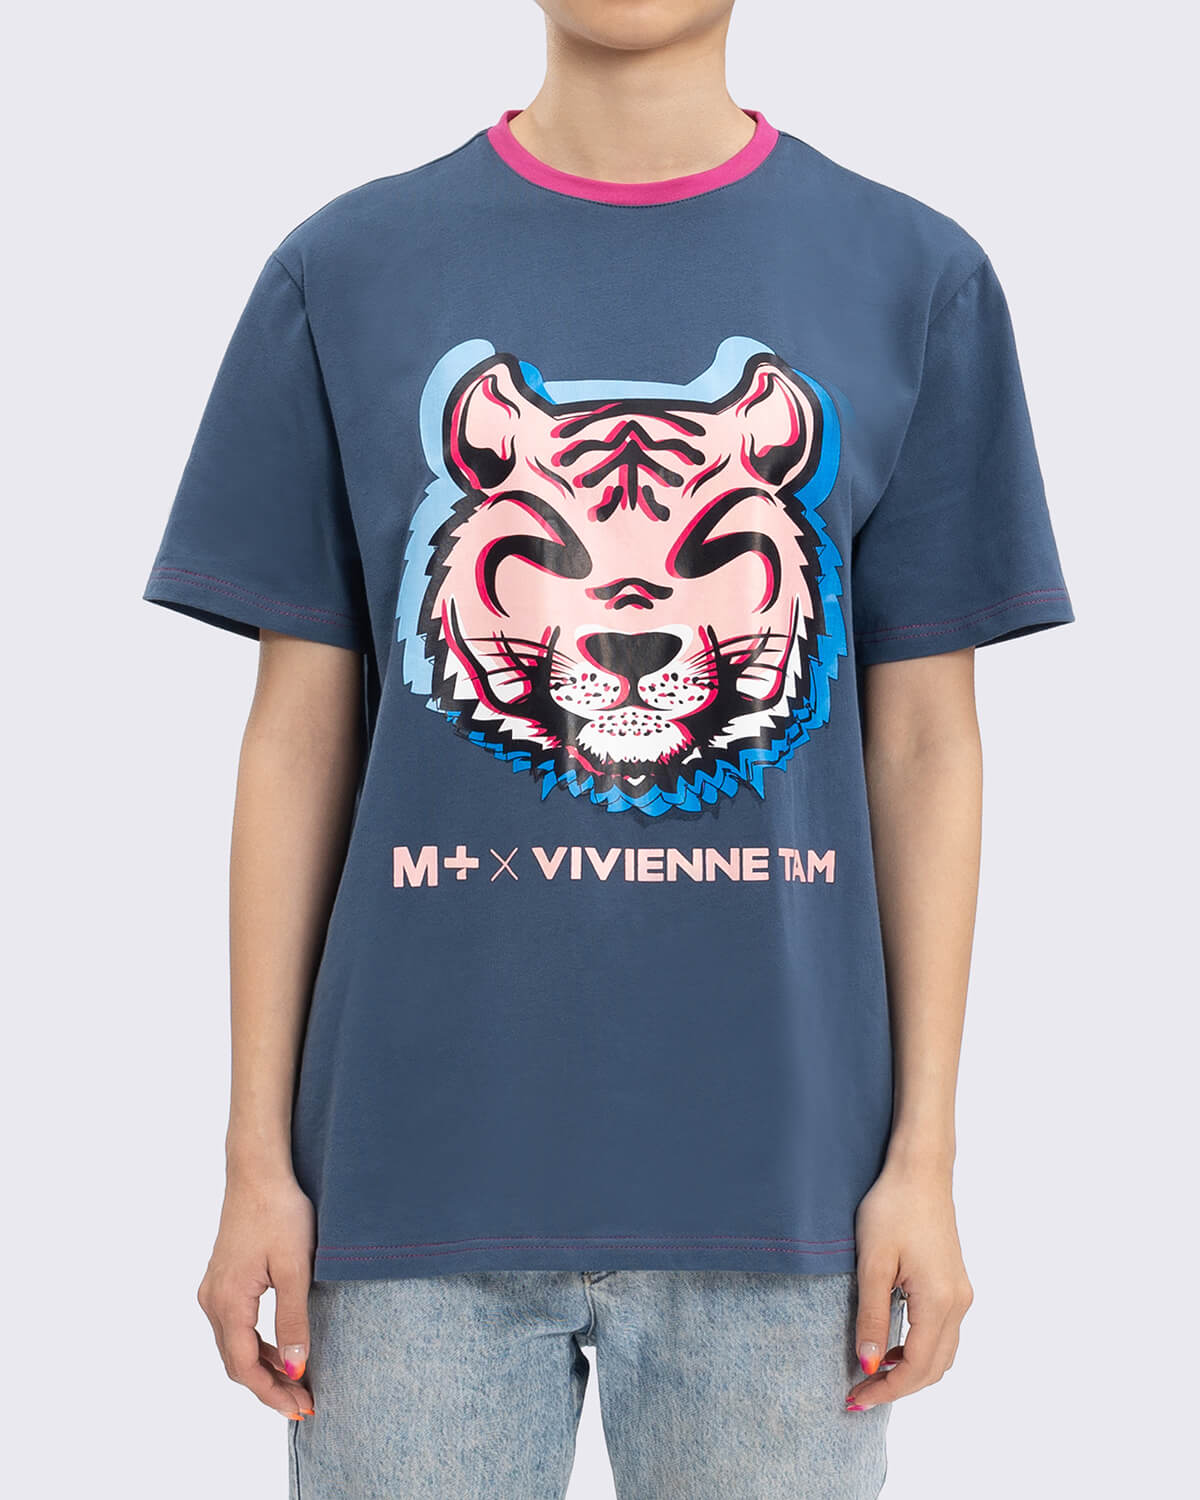 Vivienne Tam 「普普藝虎」 T恤